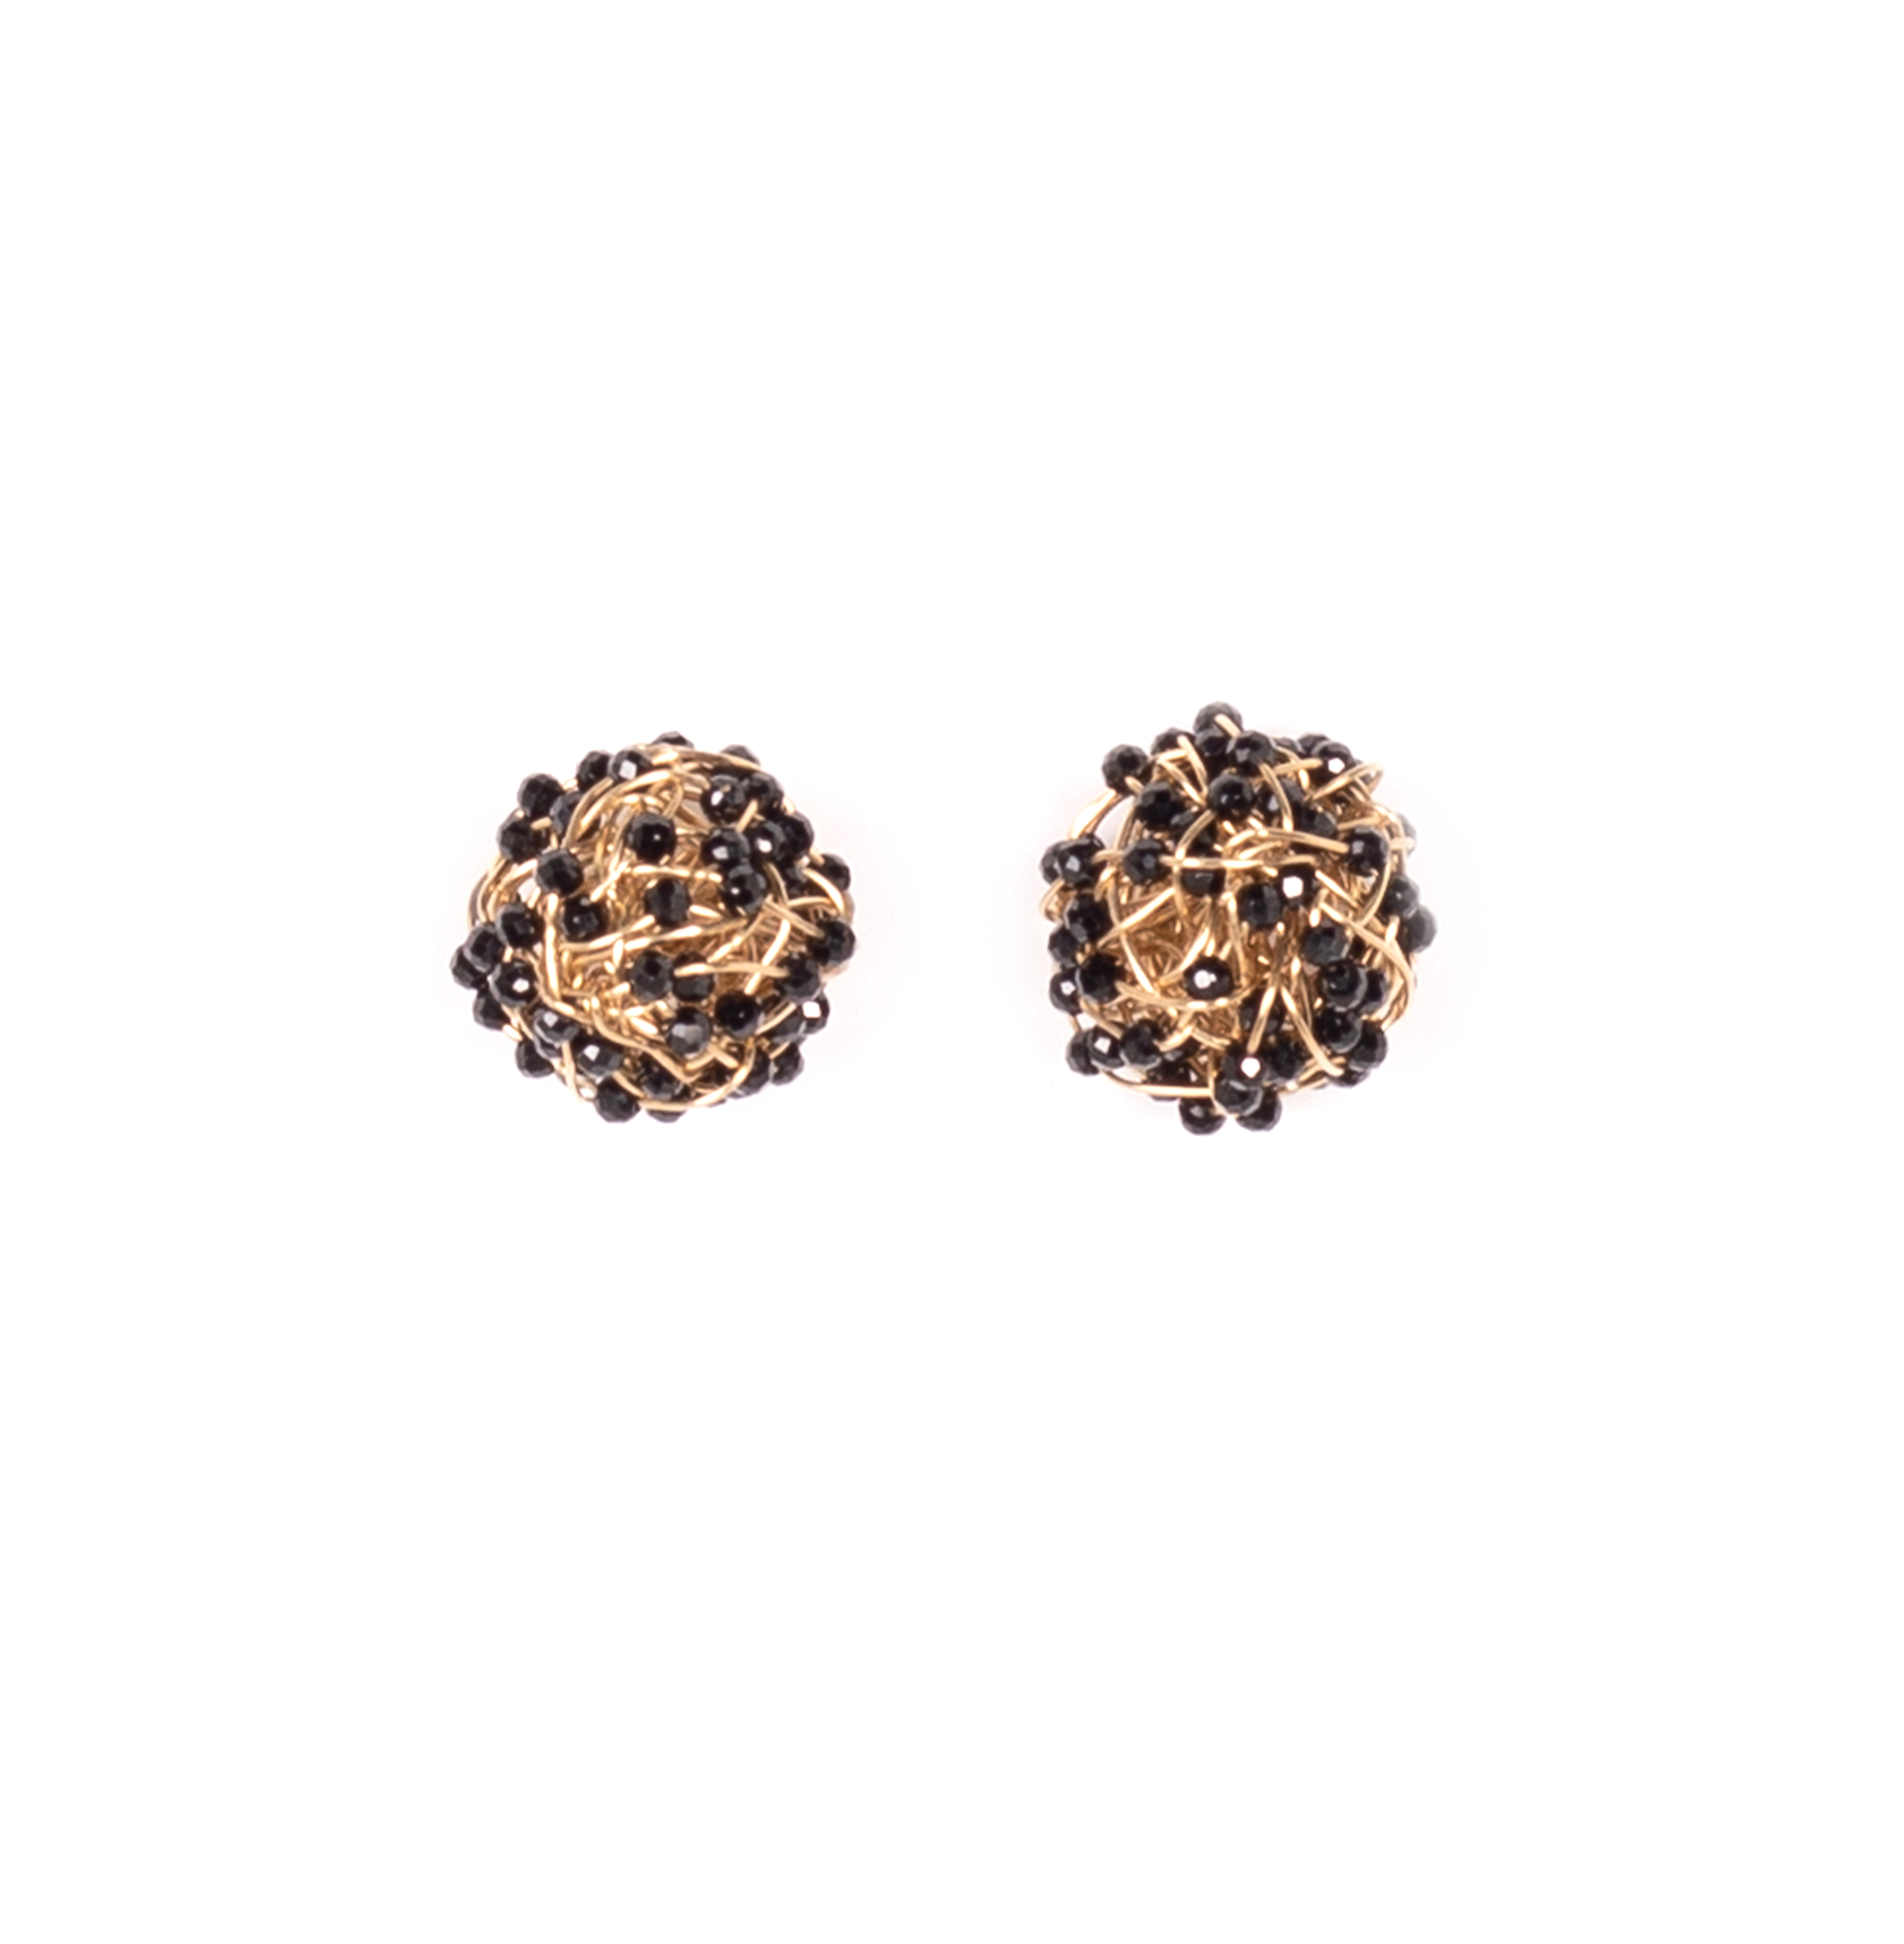 Clementina Stud Earrings #1 (12mm) - Black Onyx Earrings TARBAY   